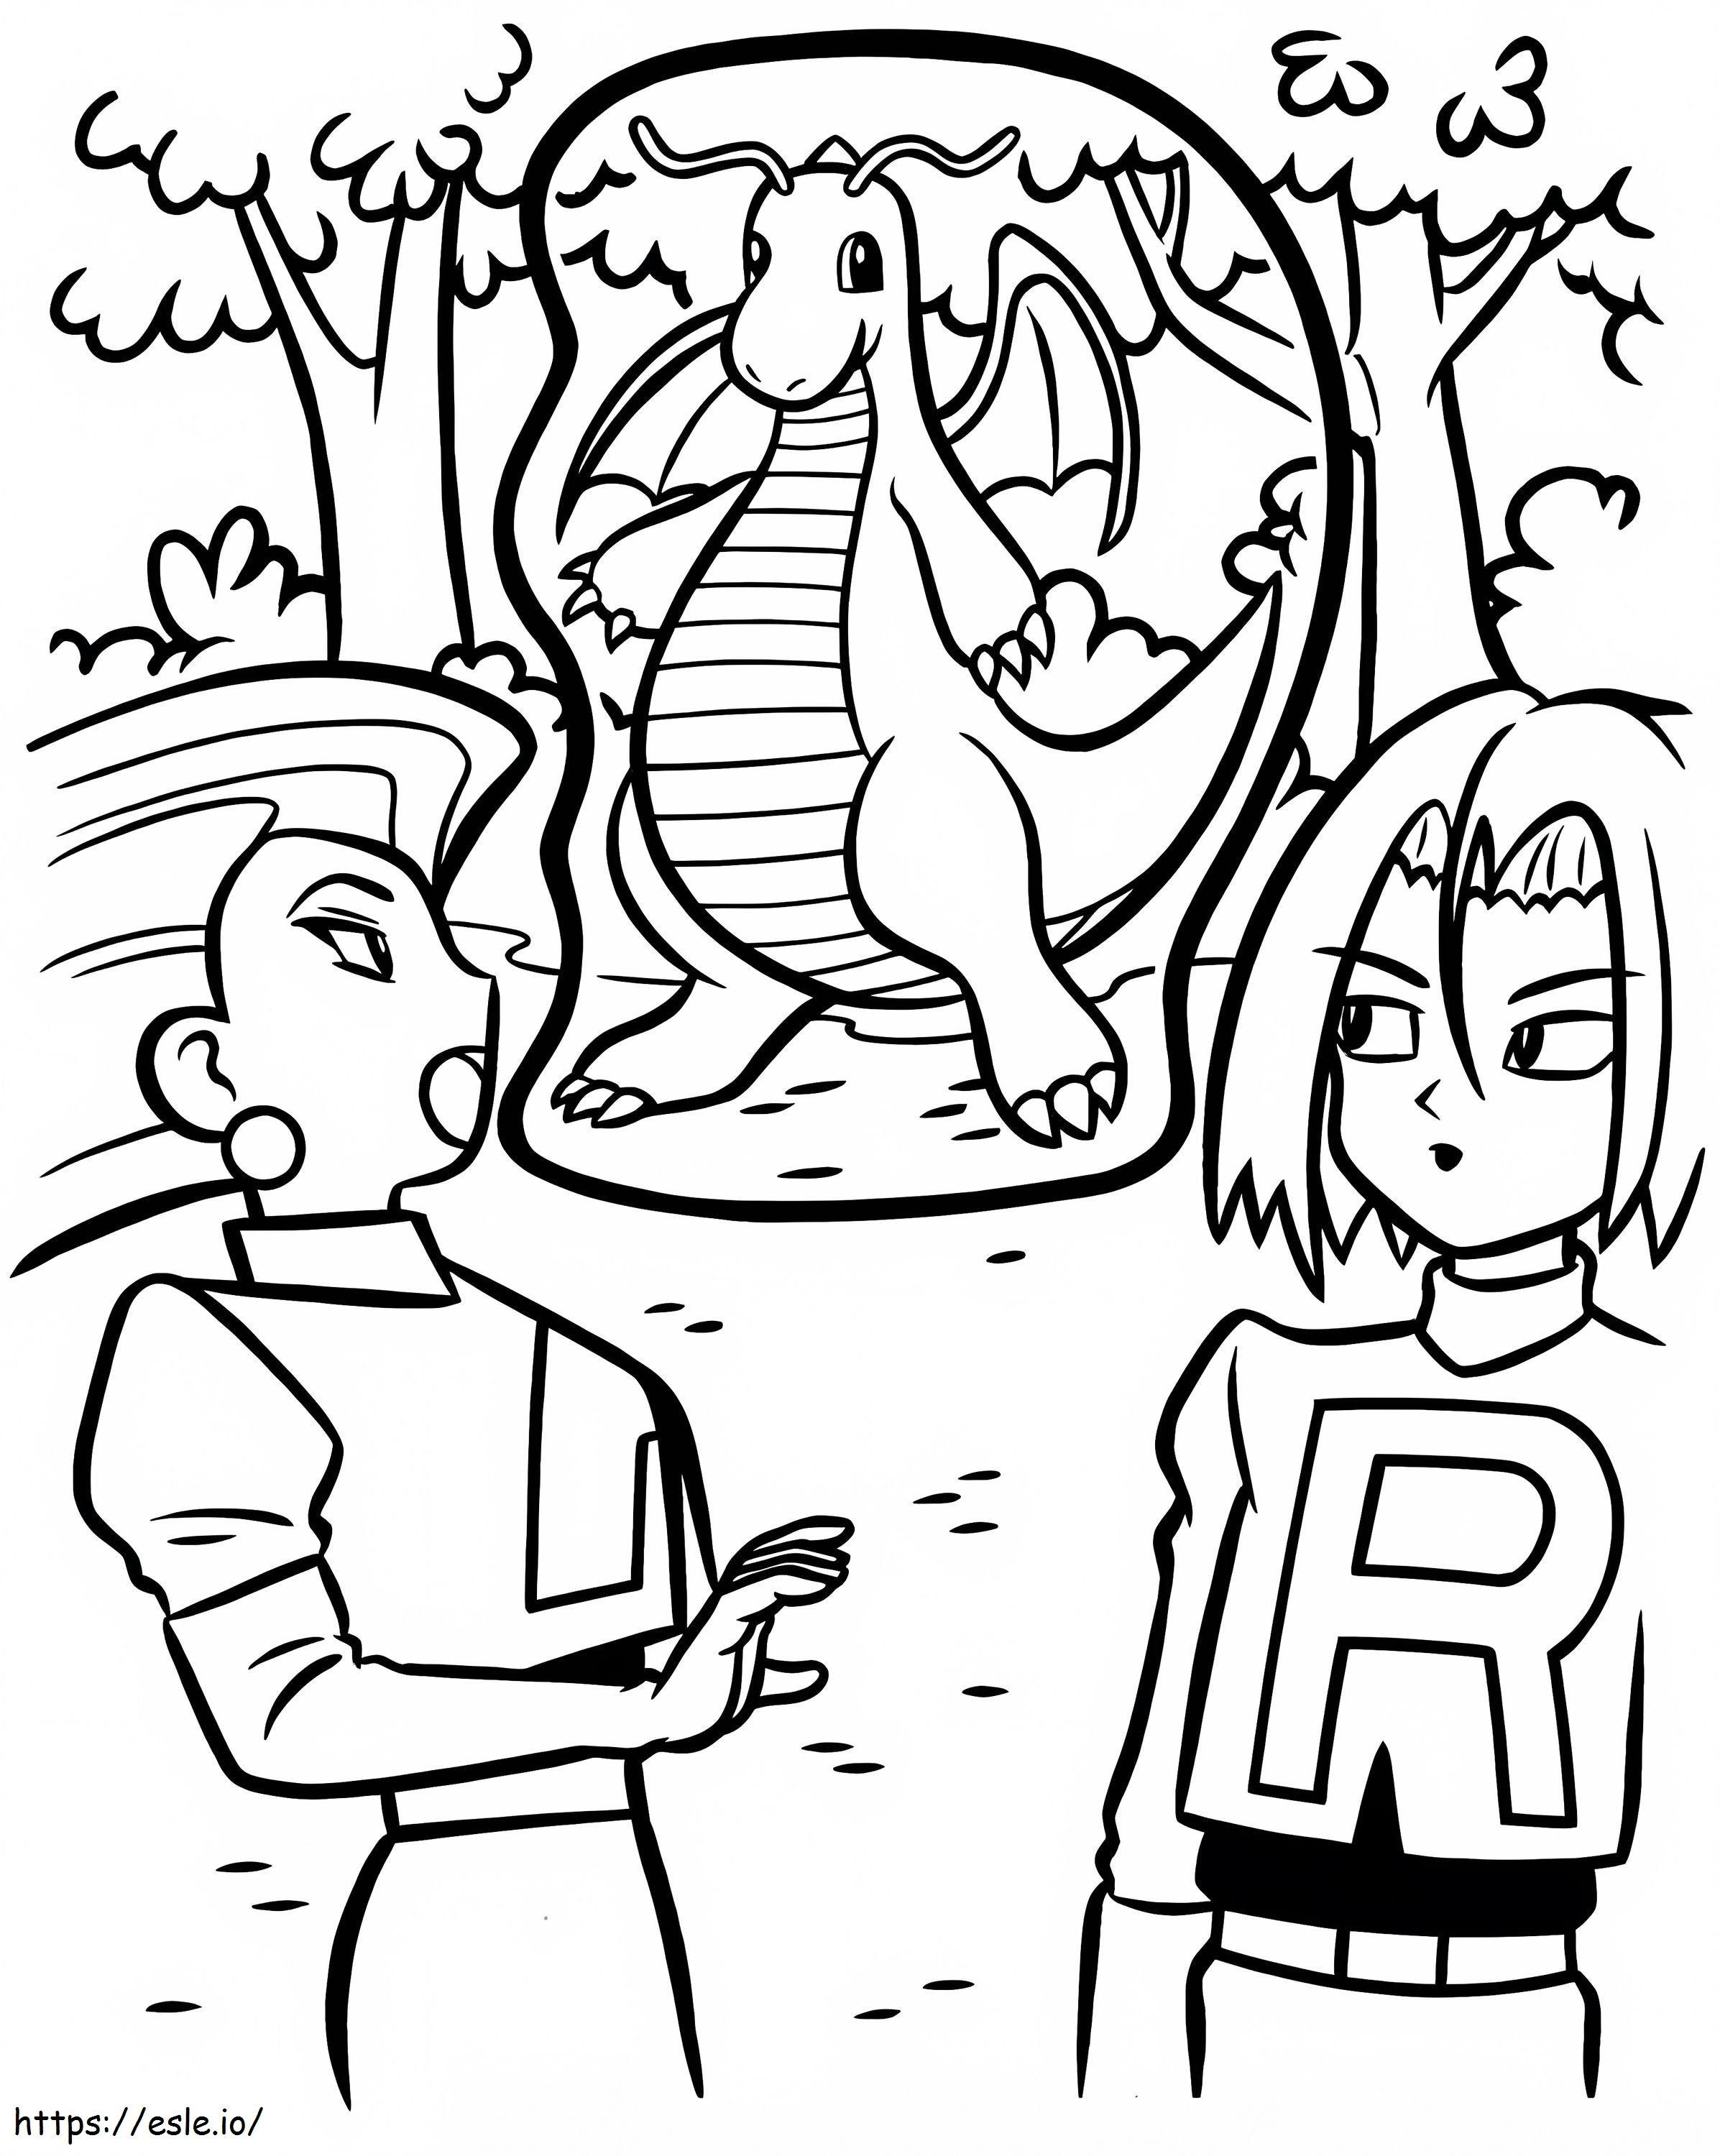 Printable Pokemon Team Rocket coloring page